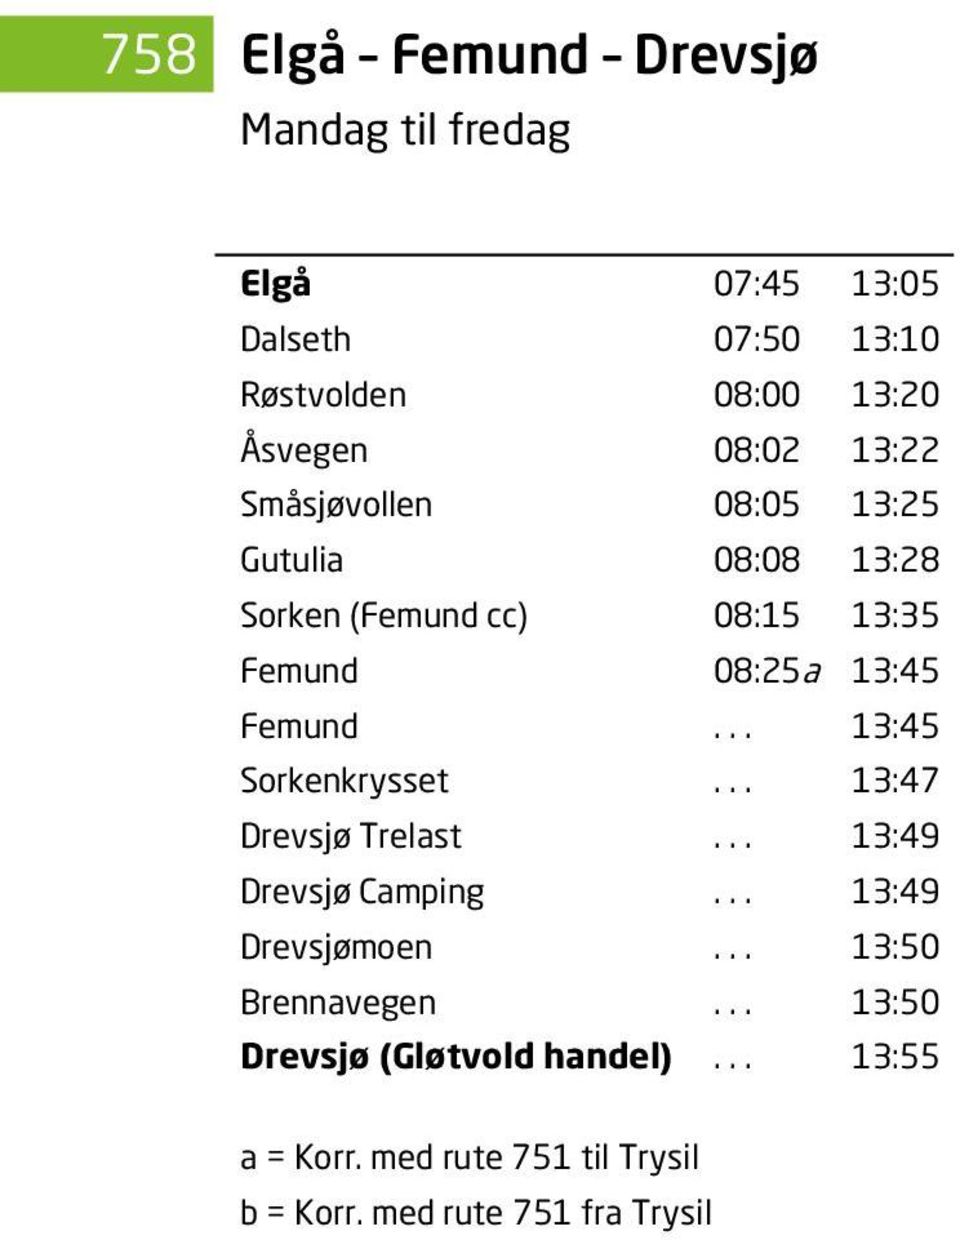 08:25a 13:45 Femund... 13:45 Sorkenkrysset... 13:47 Drevsjø Trelast... 13:49 Drevsjø Camping... 13:49 Drevsjømoen.